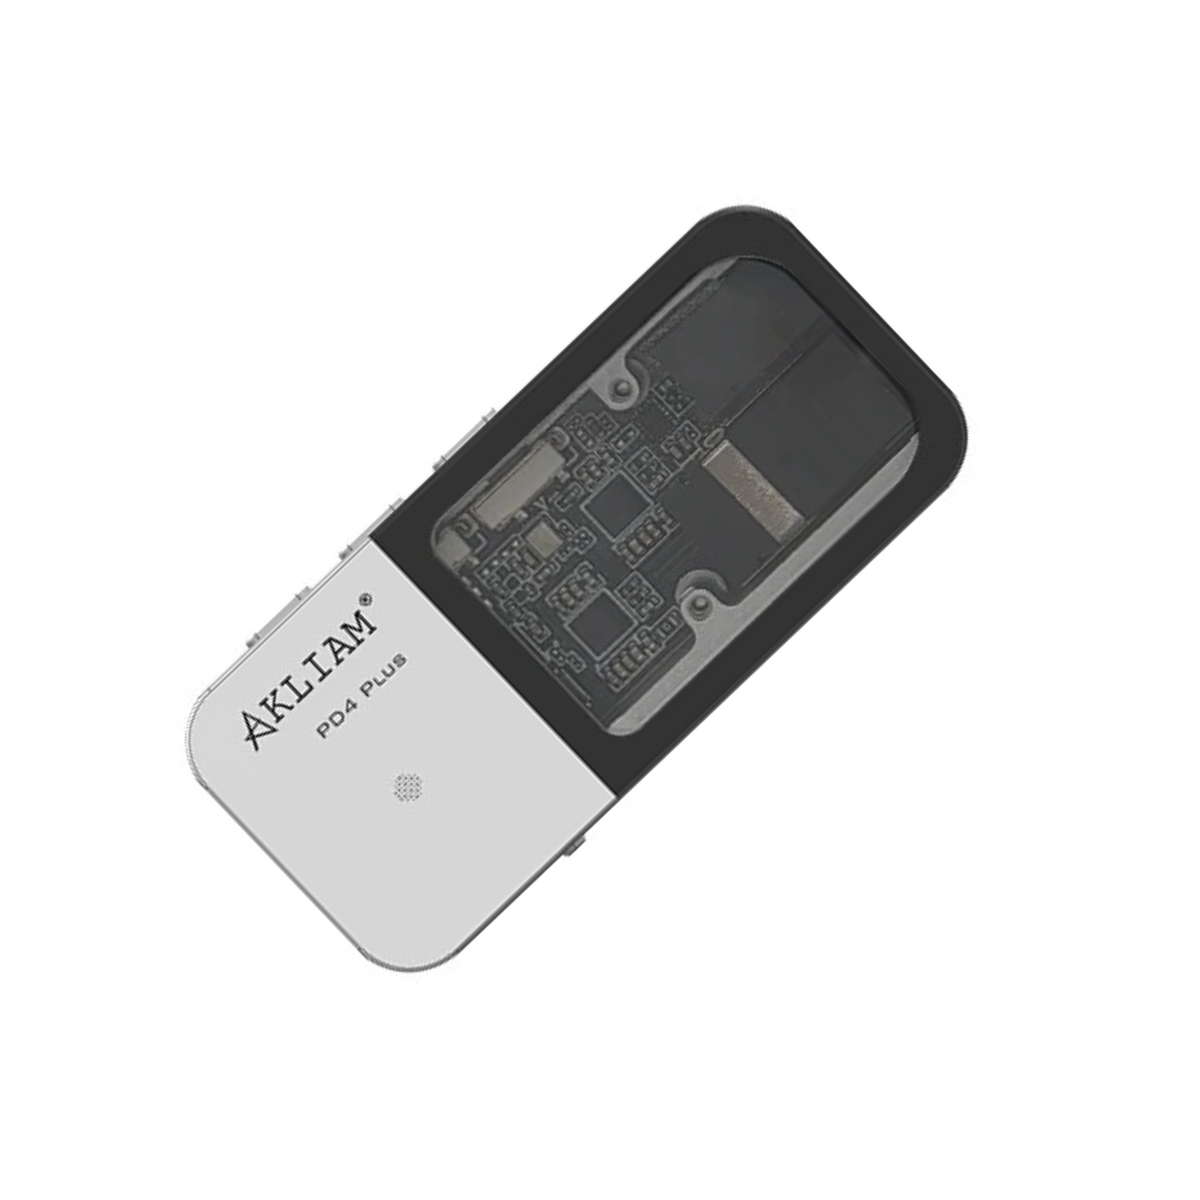 AkLIAM PD4 Plus Dual CS43131 Balanced Portable USB DAC & AMP